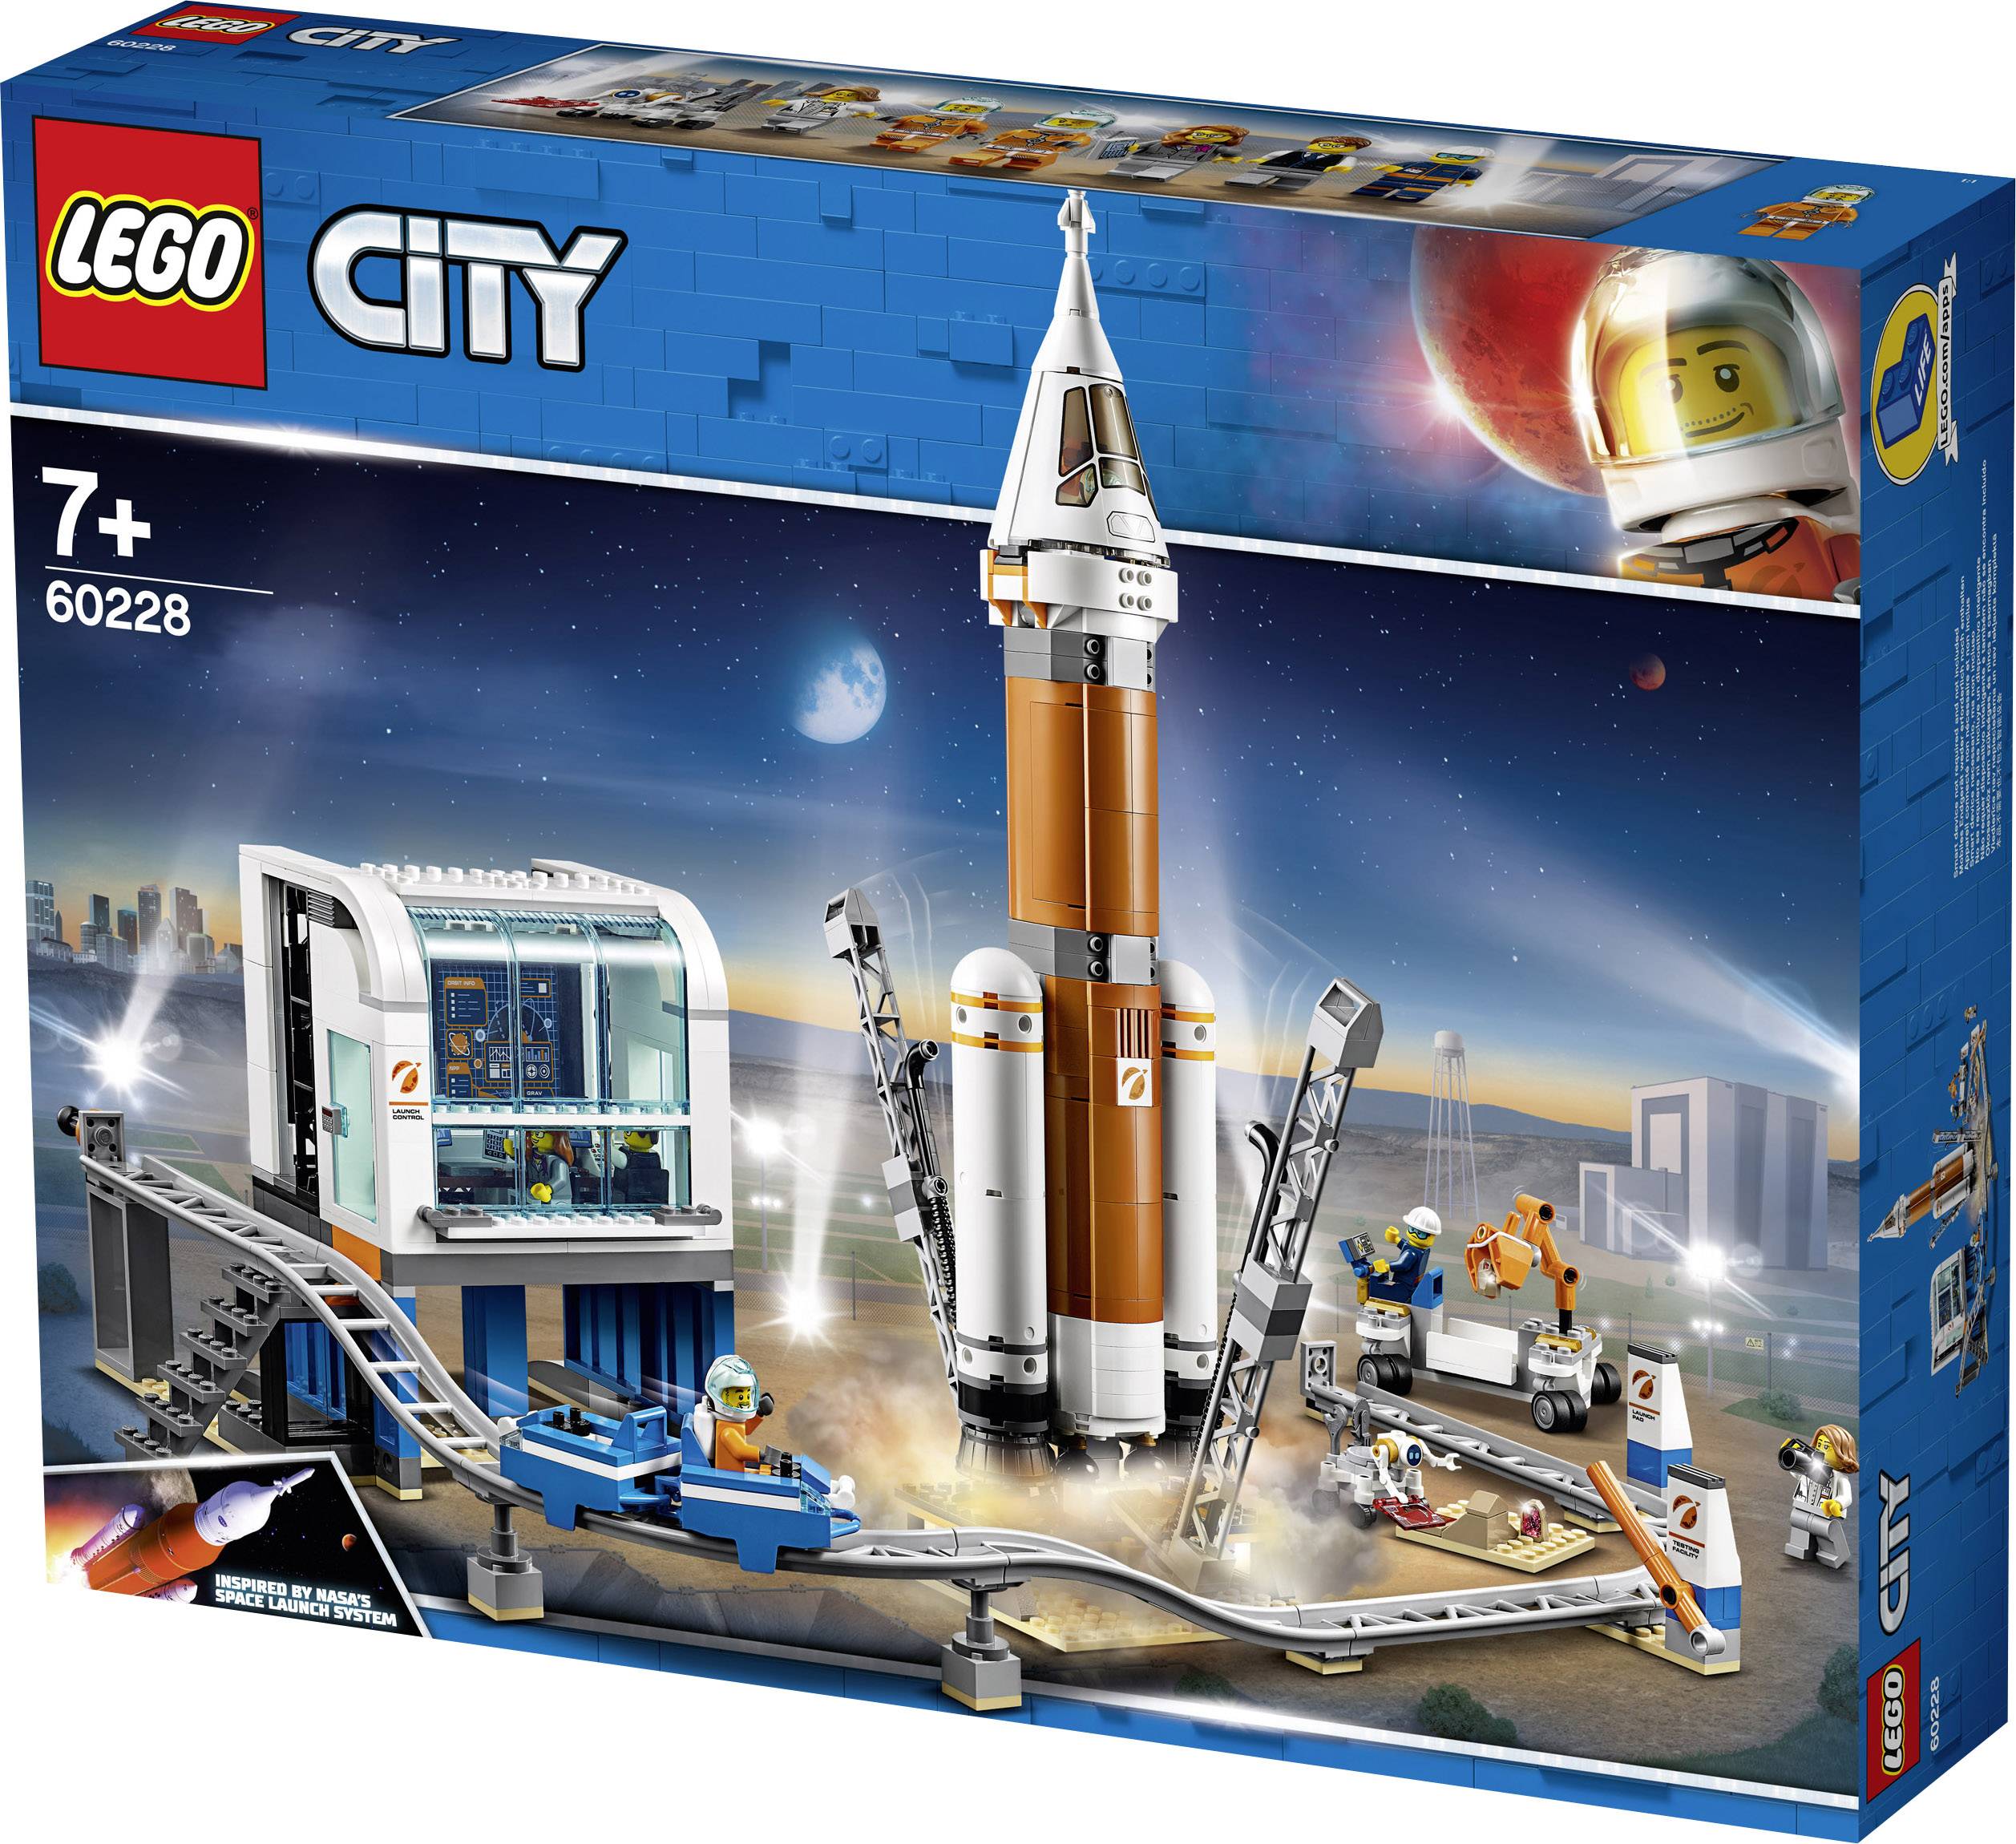 Lego City 60228 | lupon.gov.ph